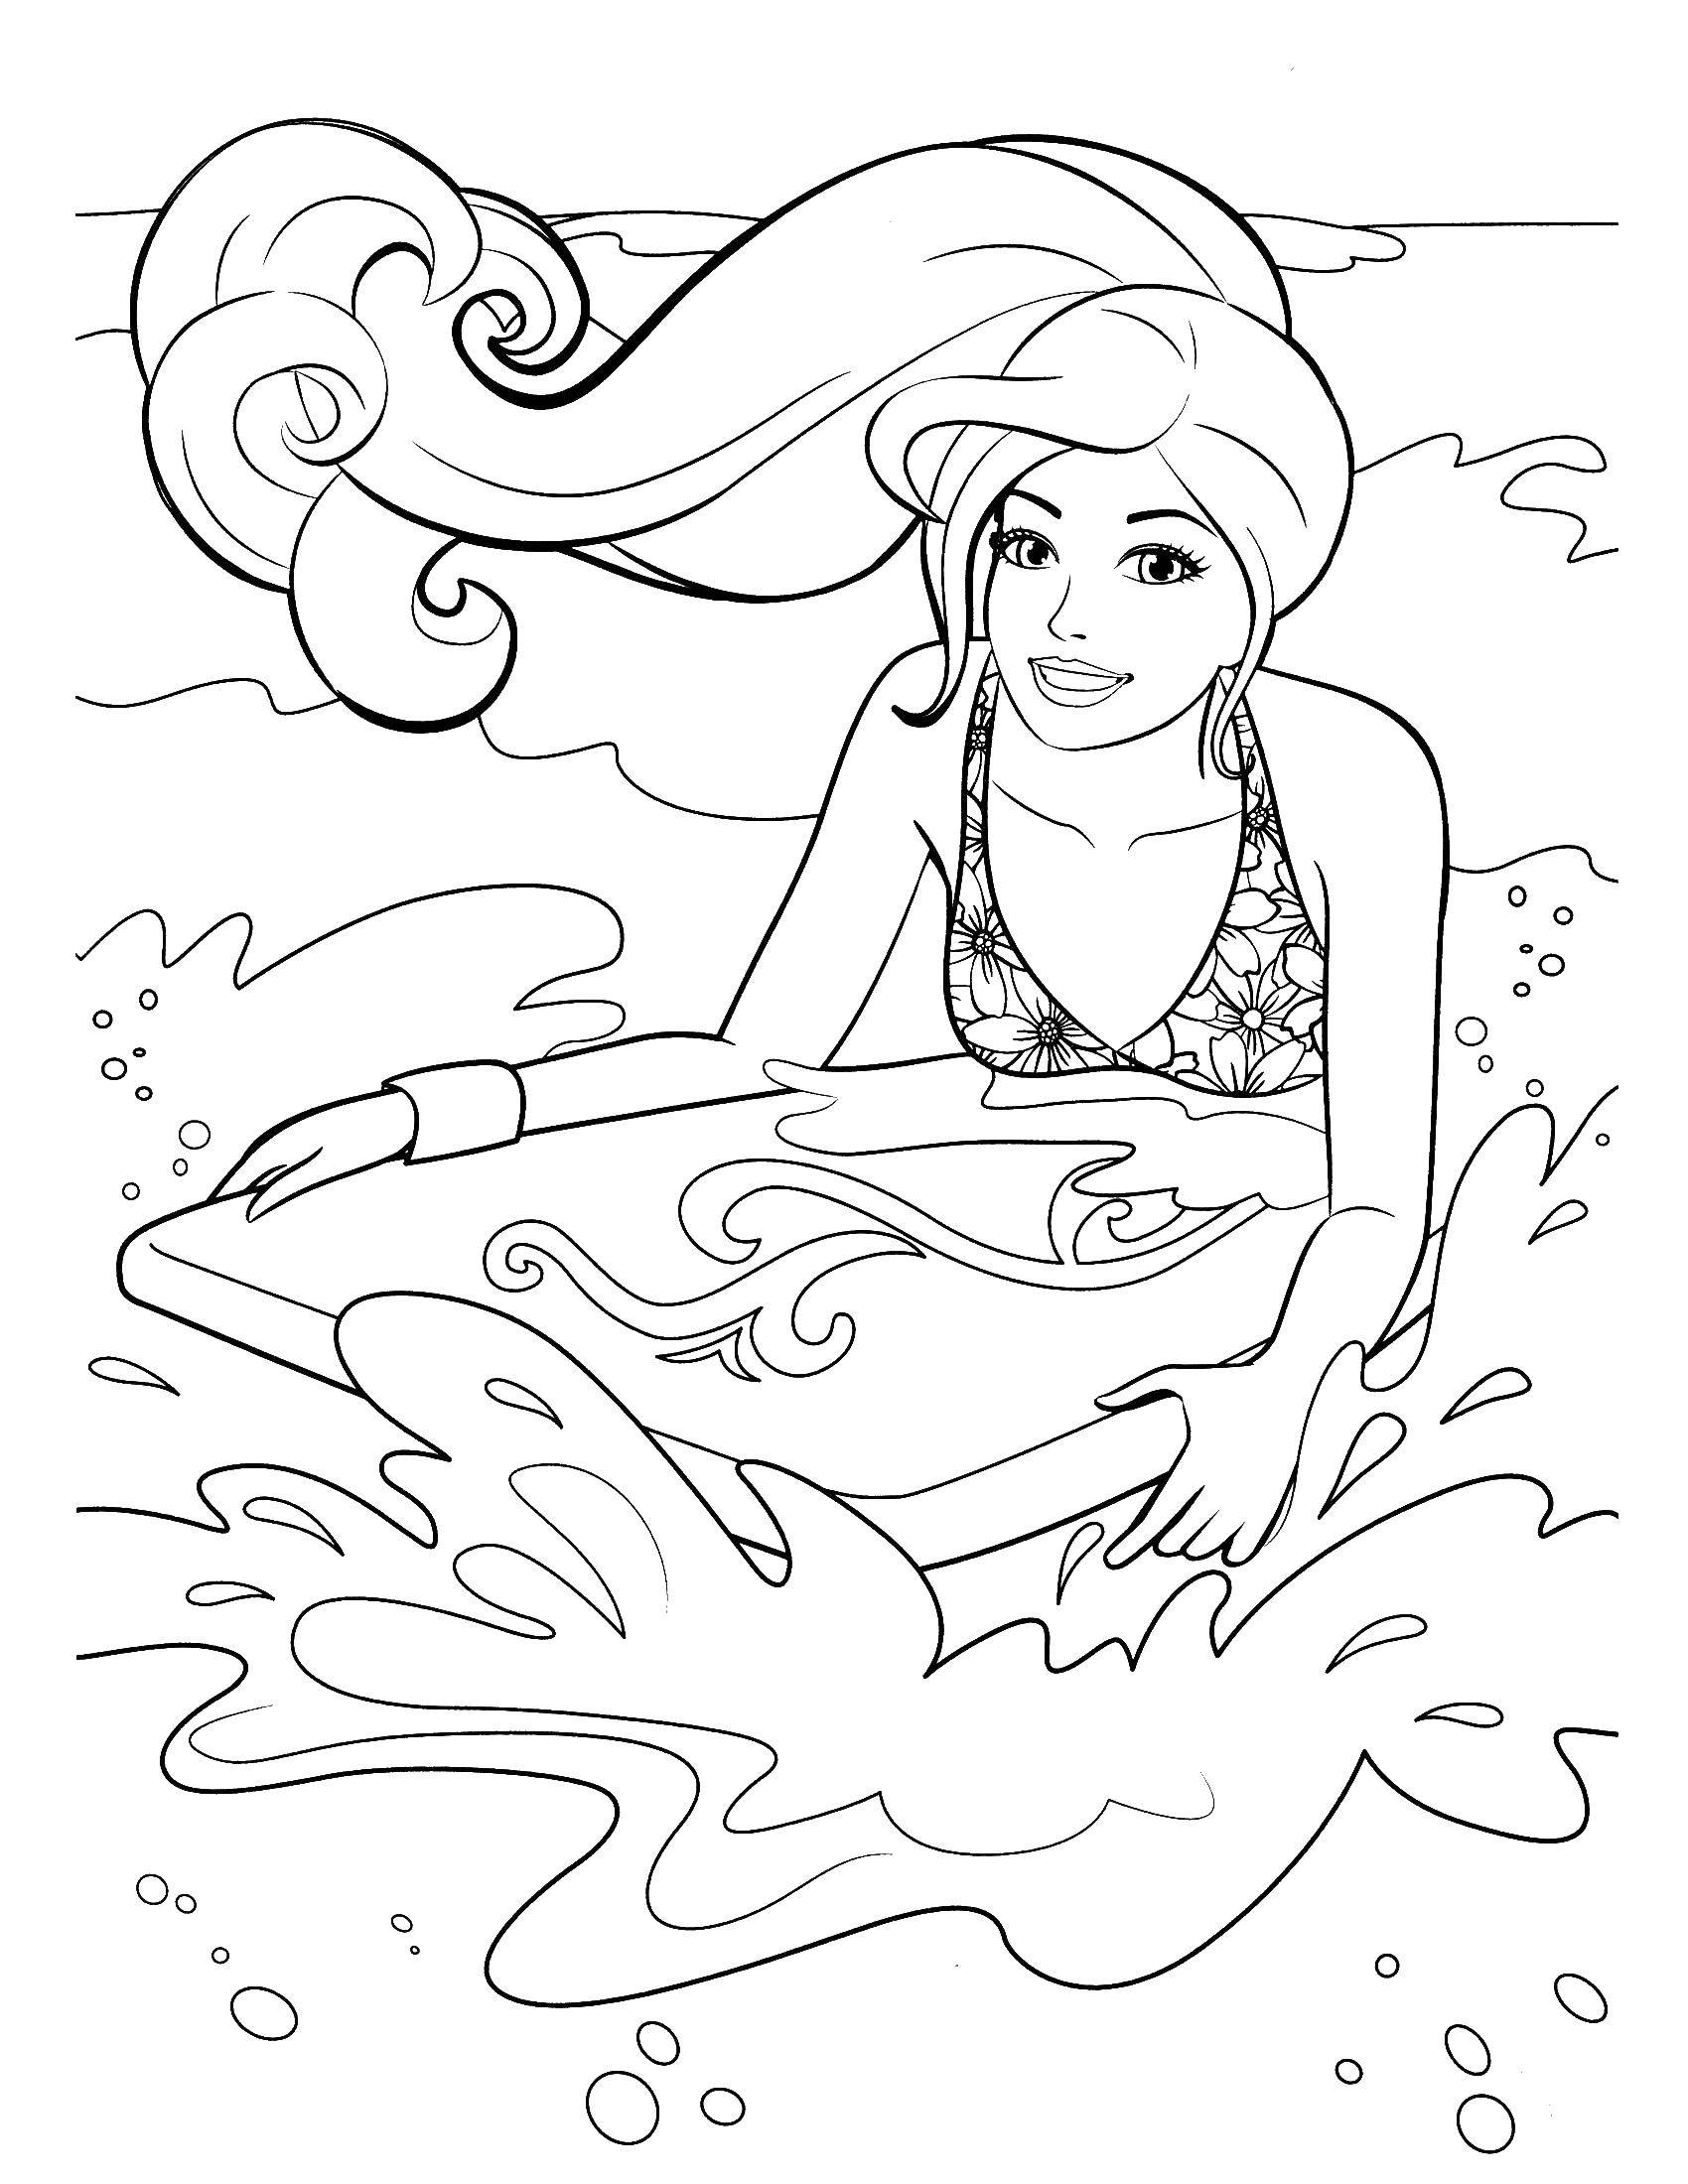 Название: Раскраска Барби на серфере в воде. Категория: Барби. Теги: барби, пляж.